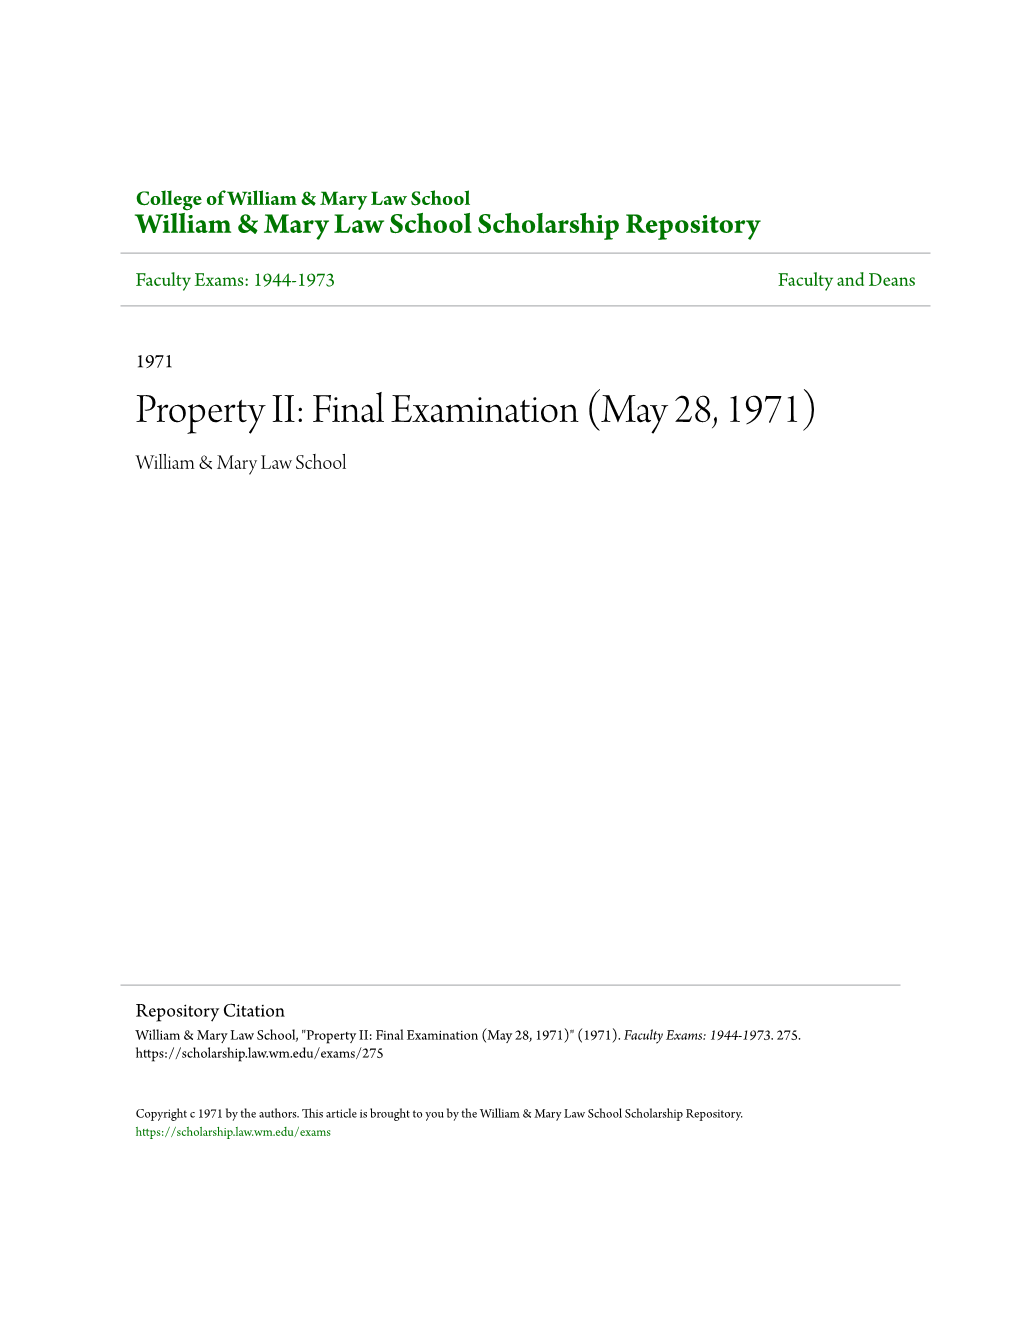 Property II: Final Examination (May 28, 1971) William & Mary Law School